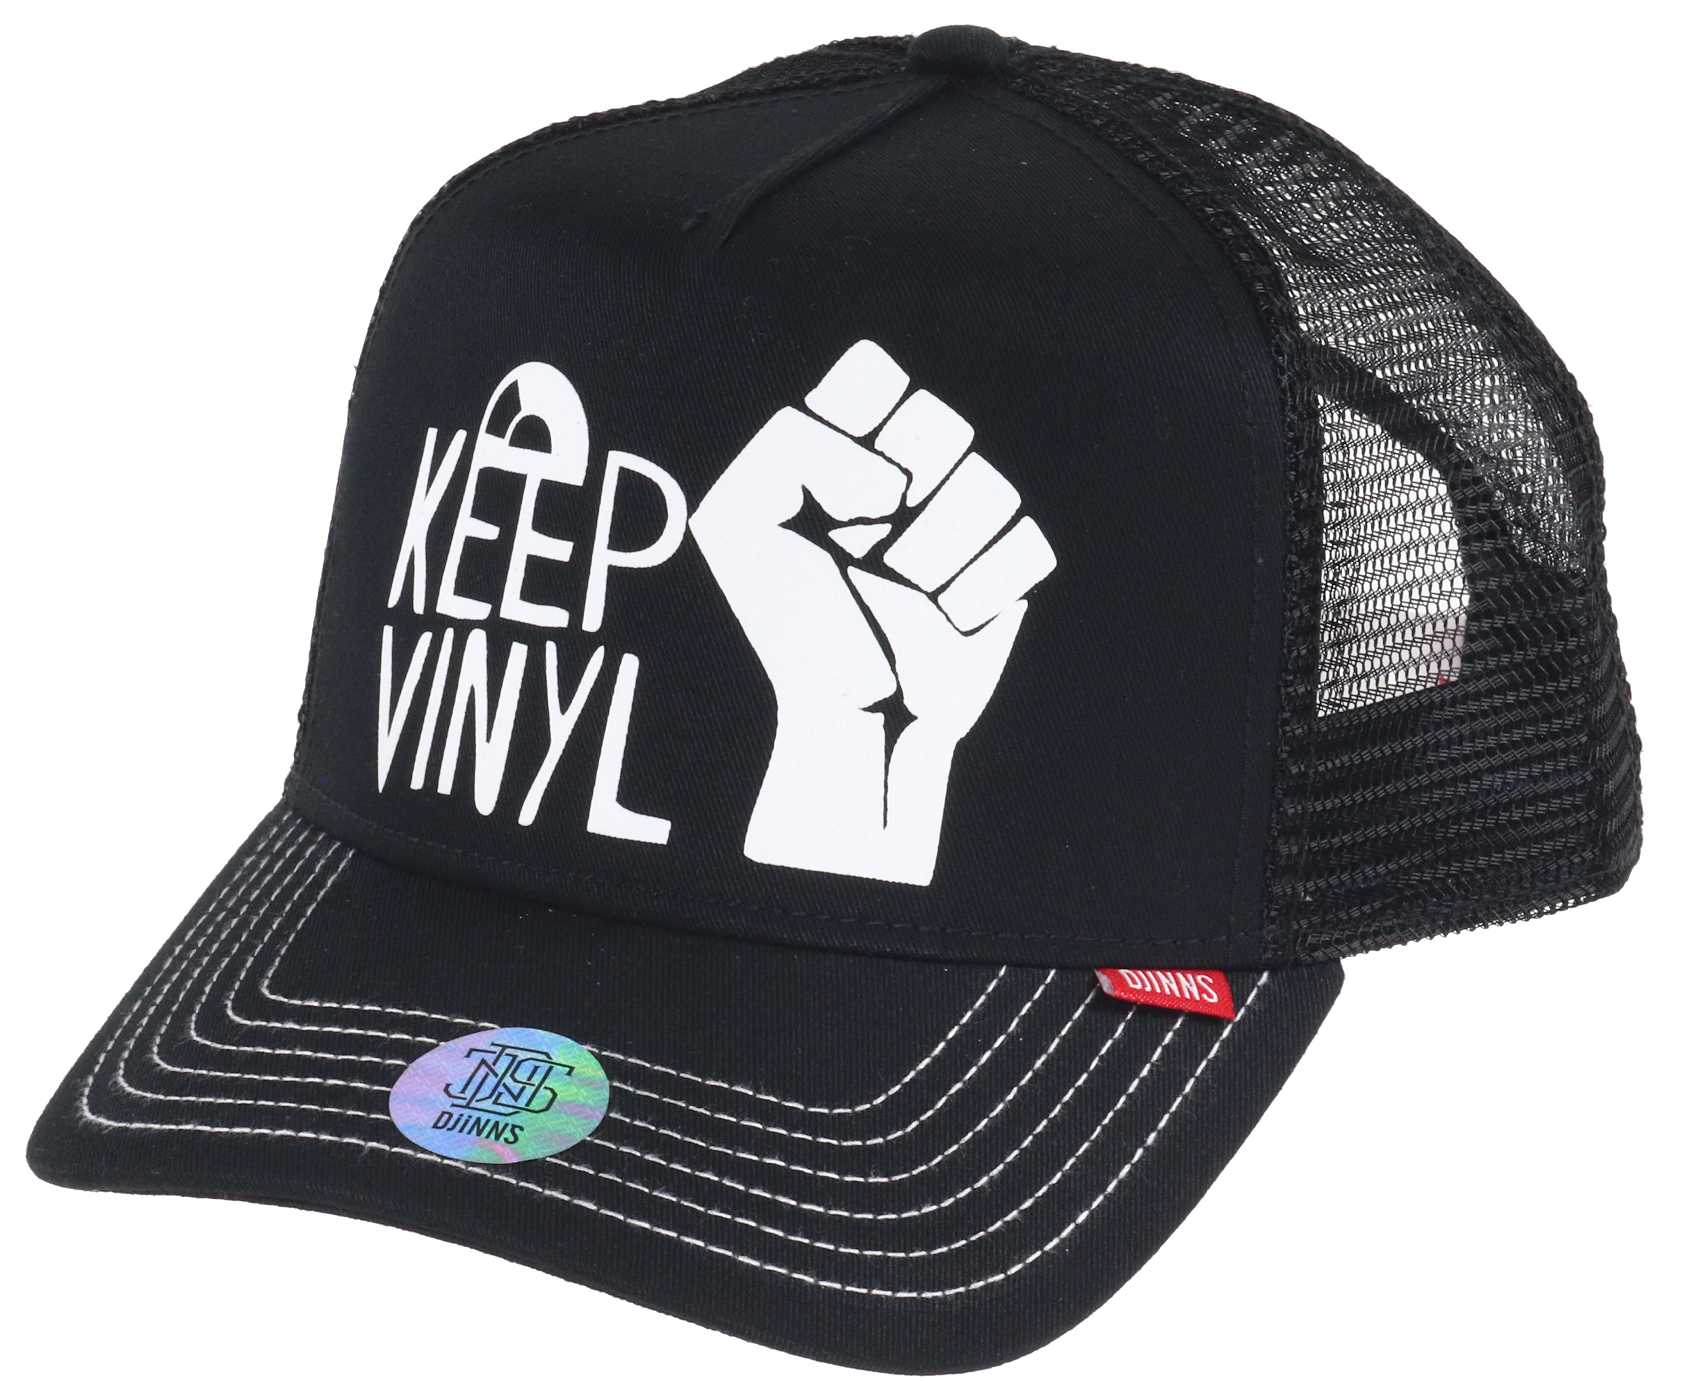 Keep Vinyl HFT Trucker Cap Djinns